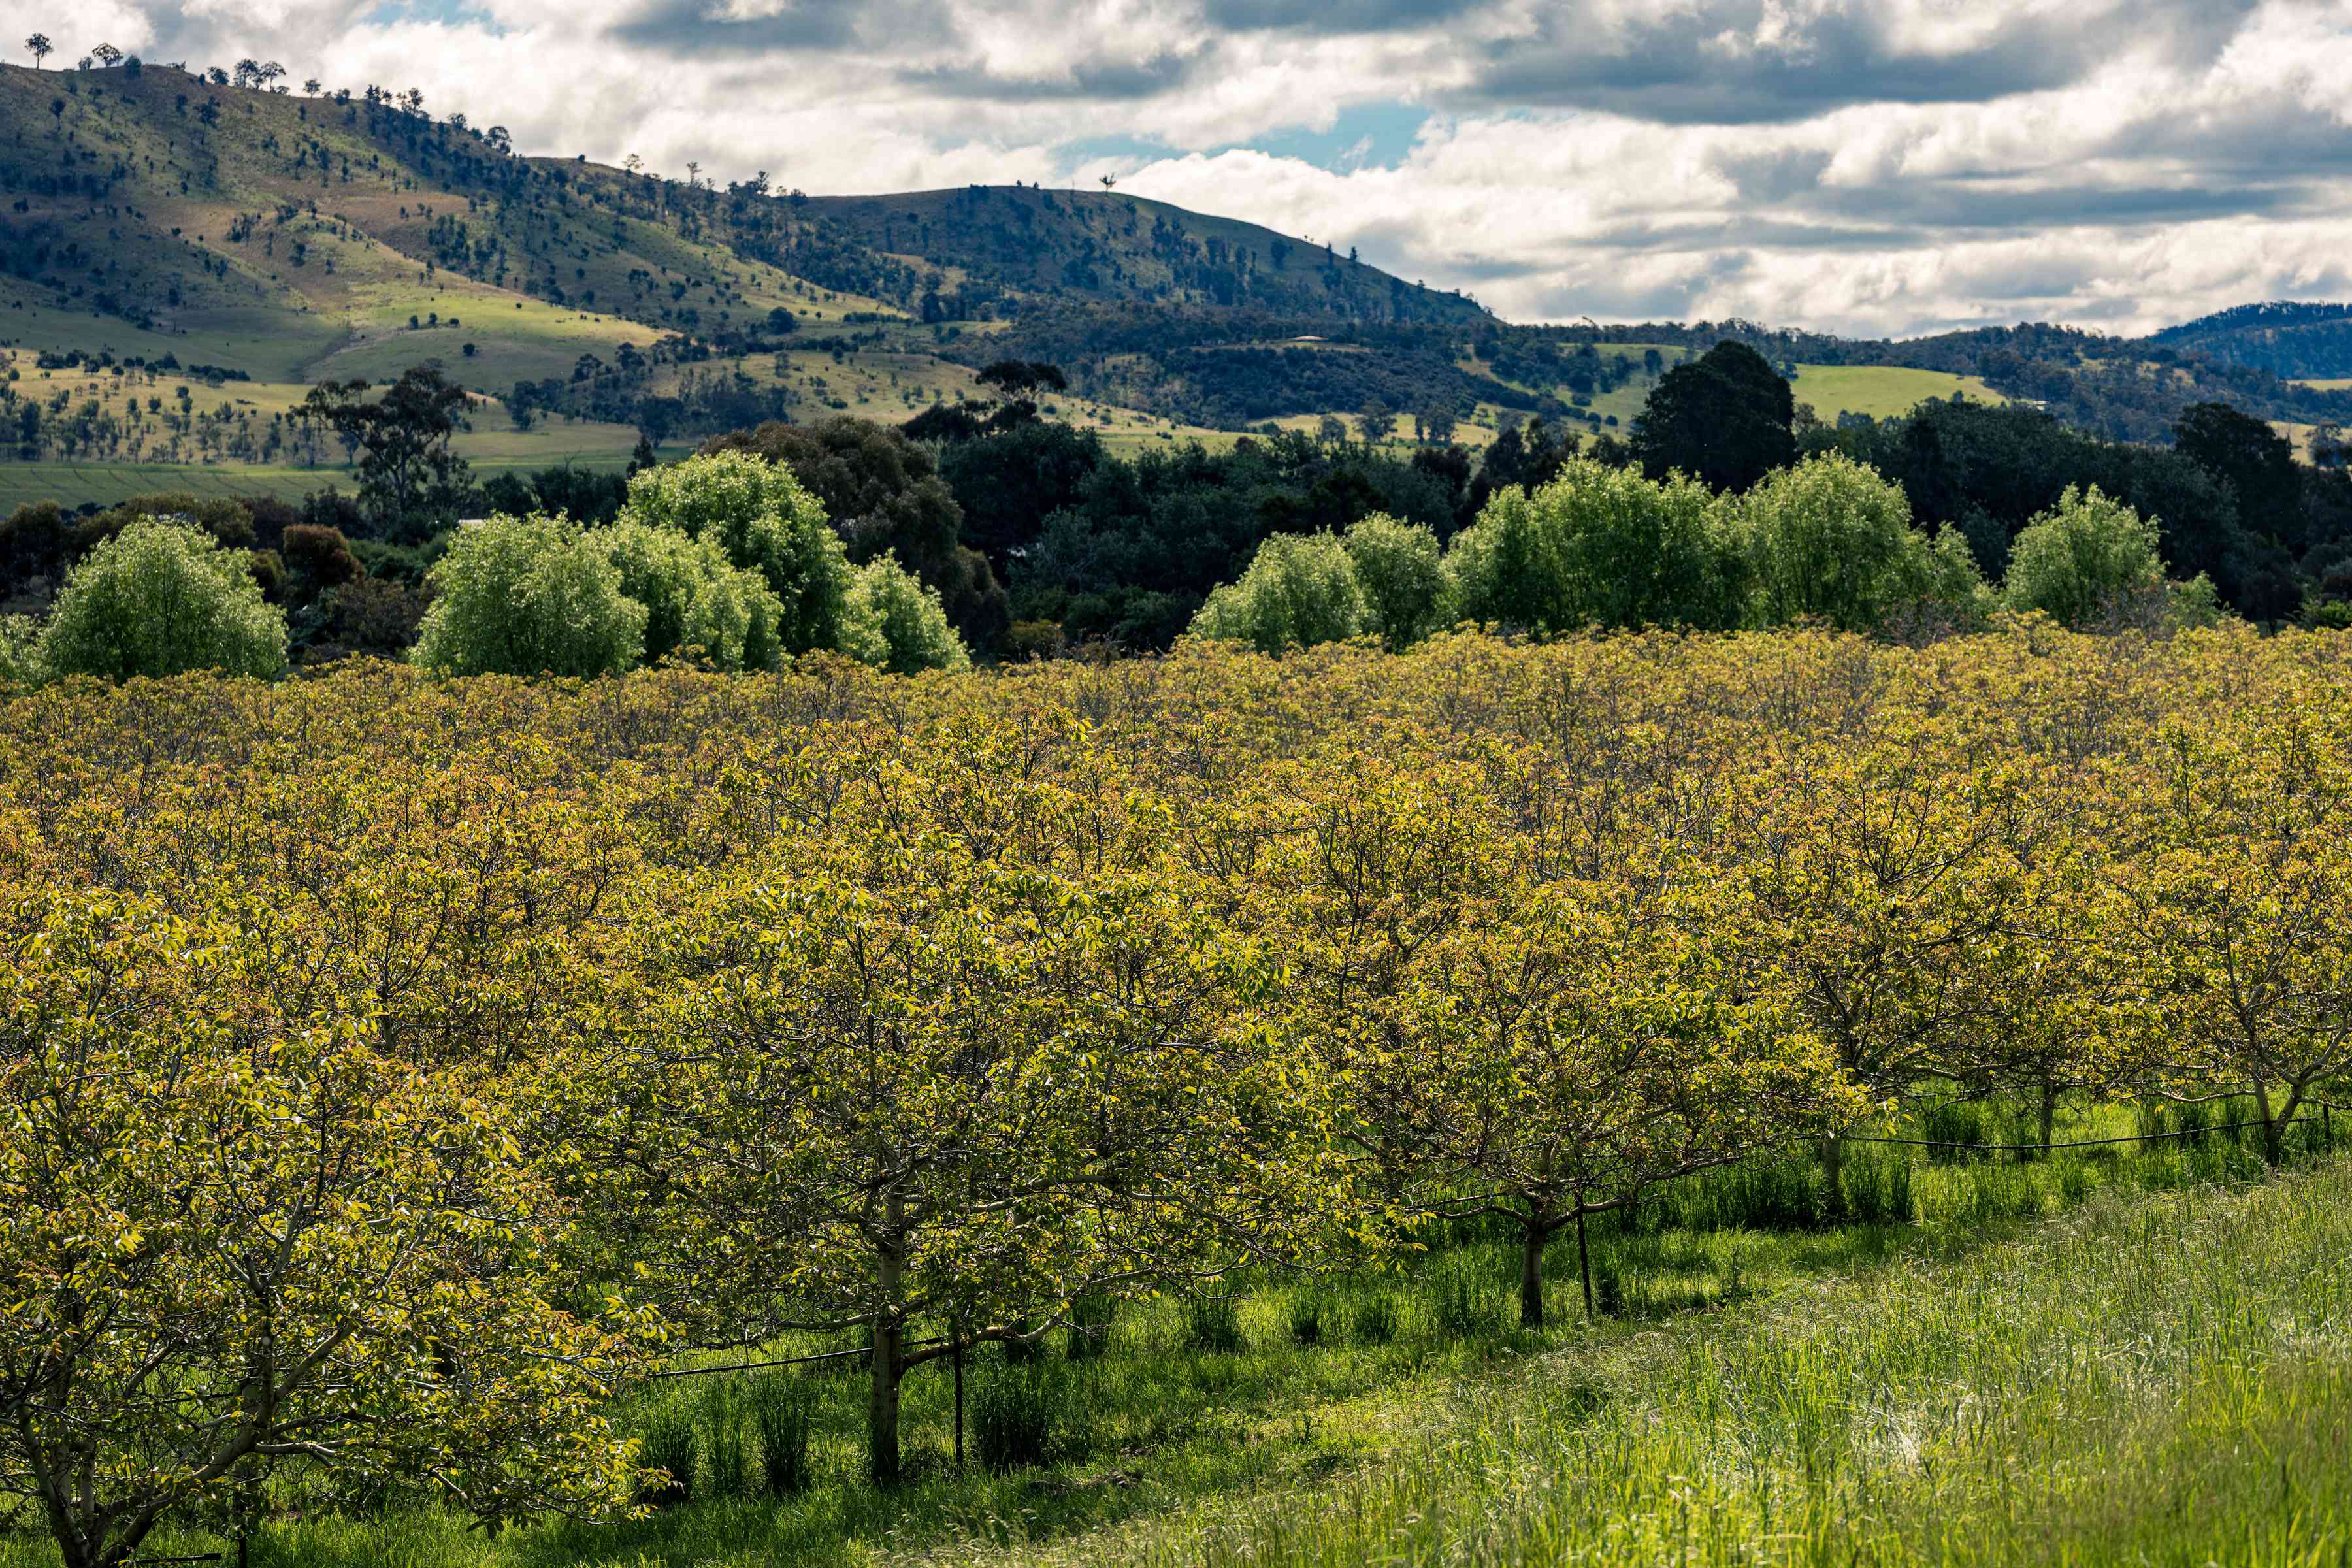 Walnut orchard at Coaldale Walnuts, Southern Tasmania. Photo: Andrew Wilson.